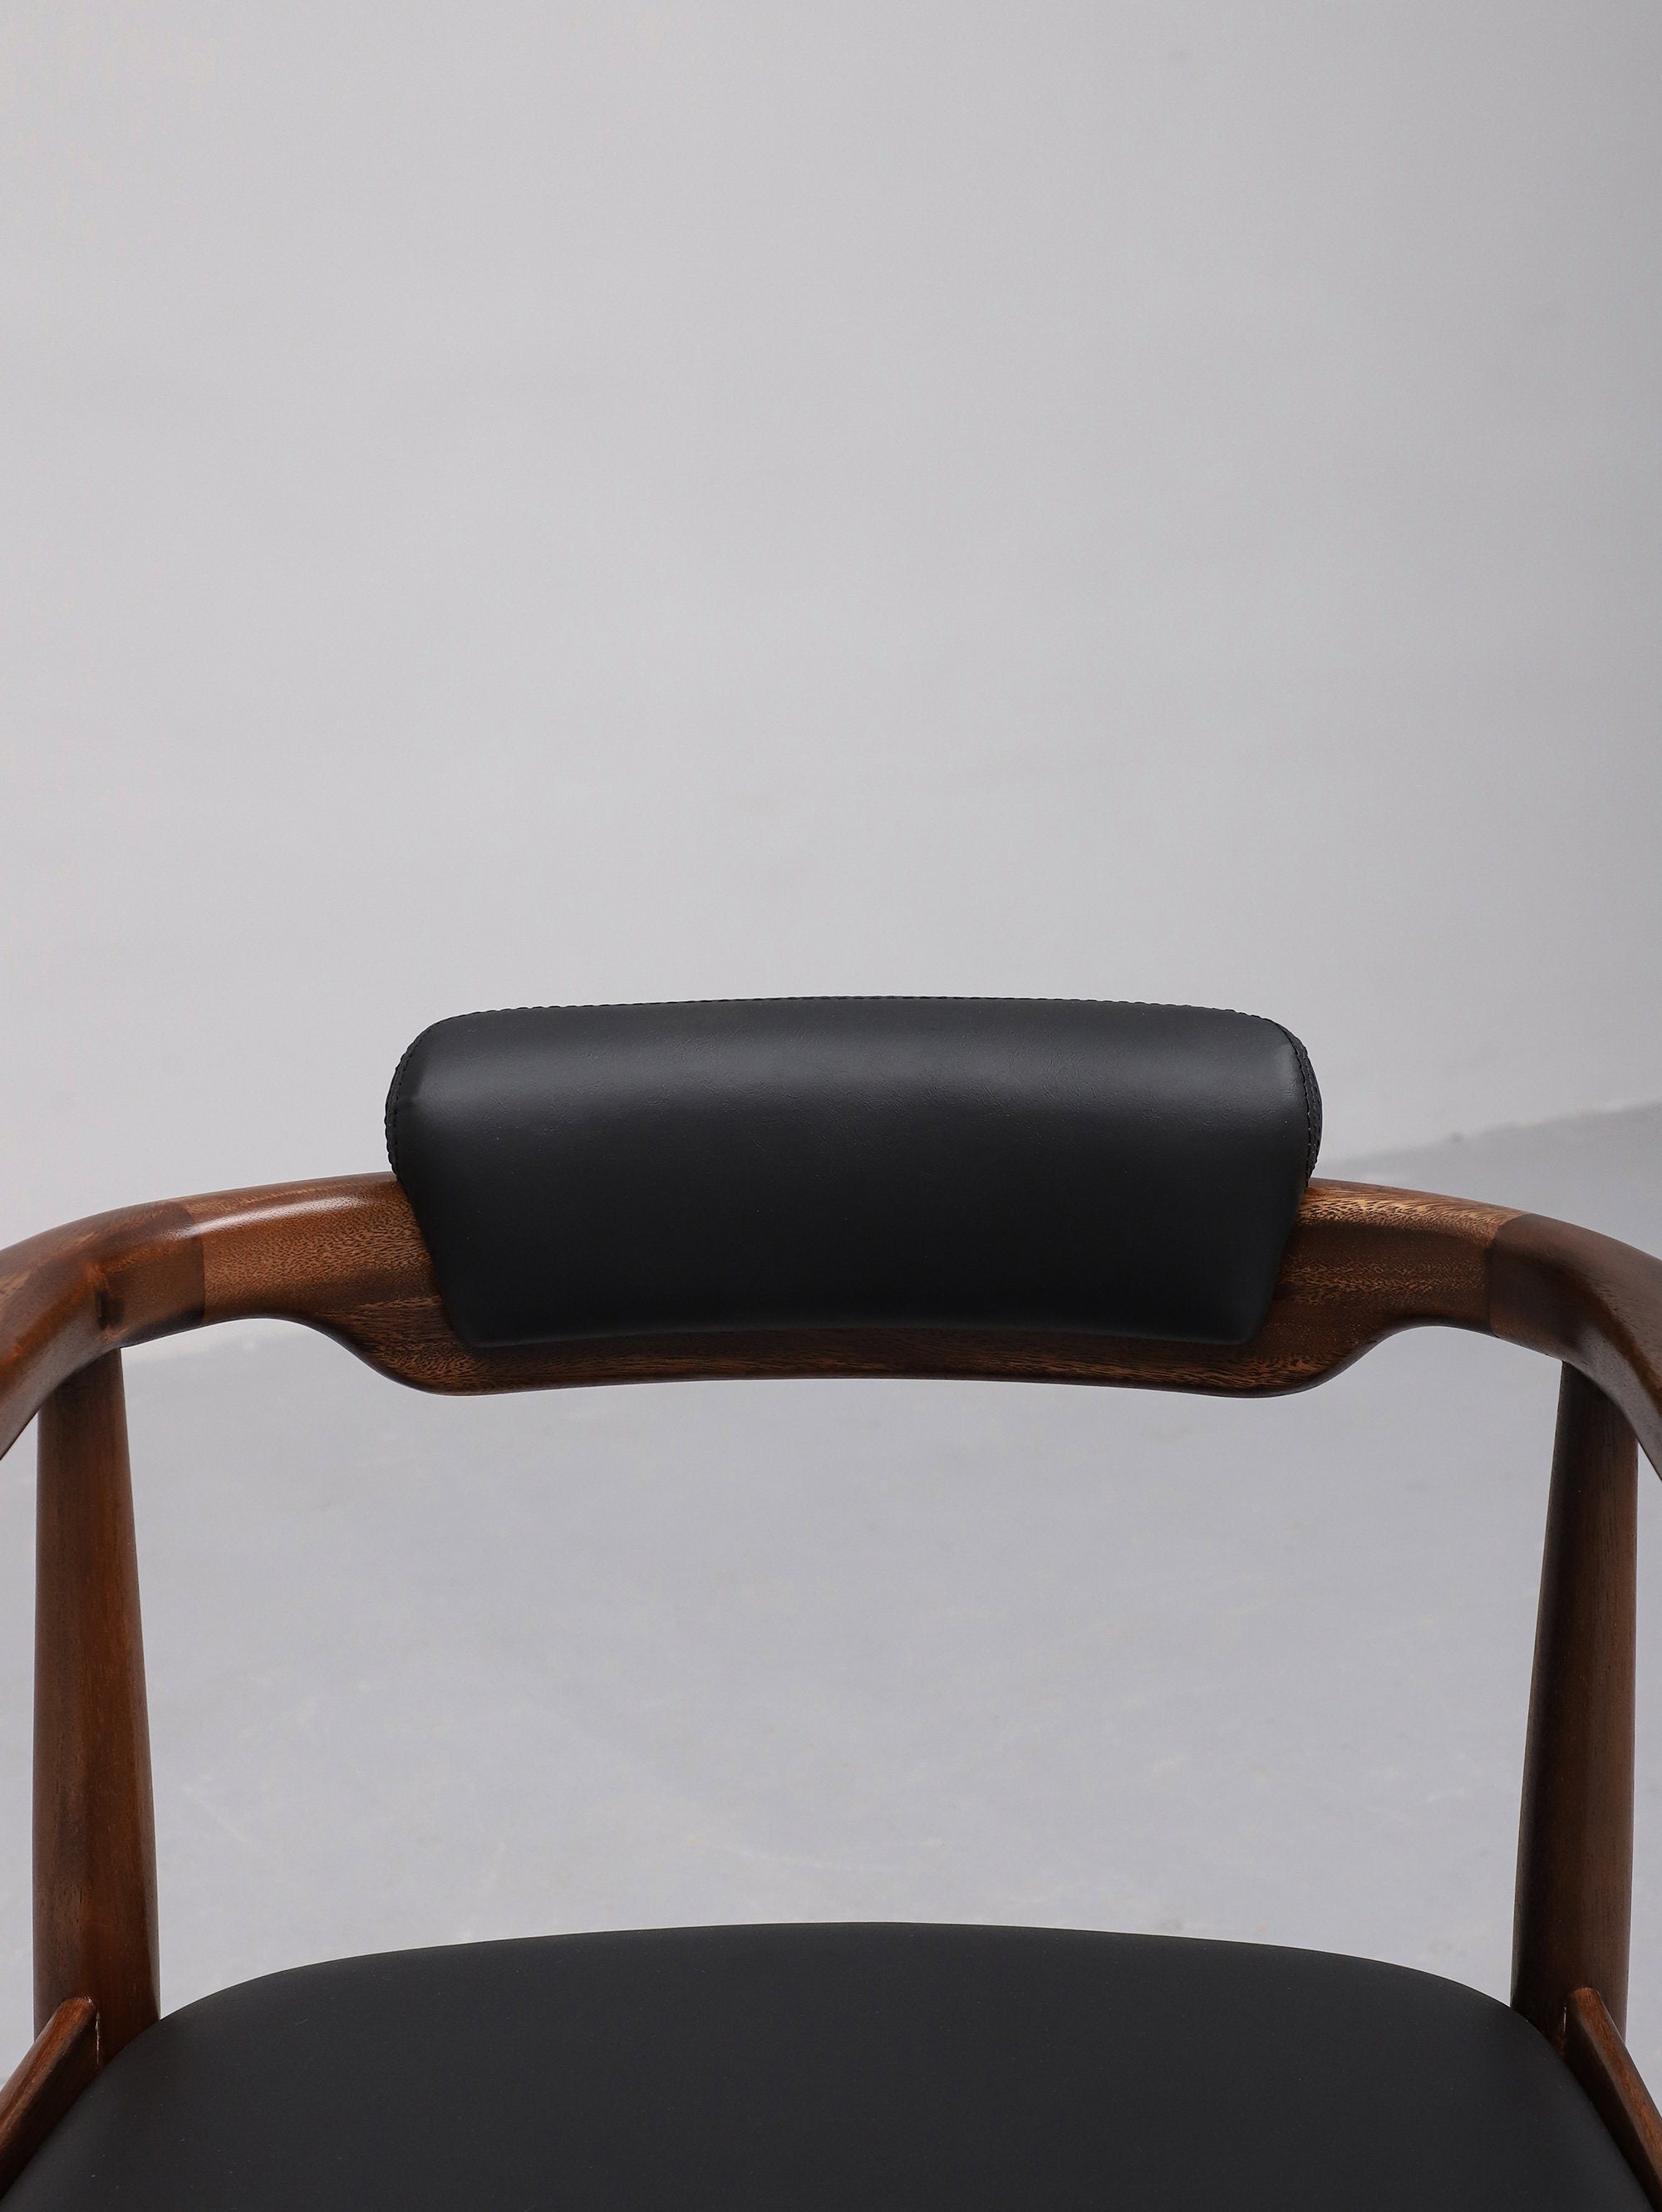 sedia in pelle nera, sedia imbottita in tessuto, sedia in noce, pelle, legno di alta qualità